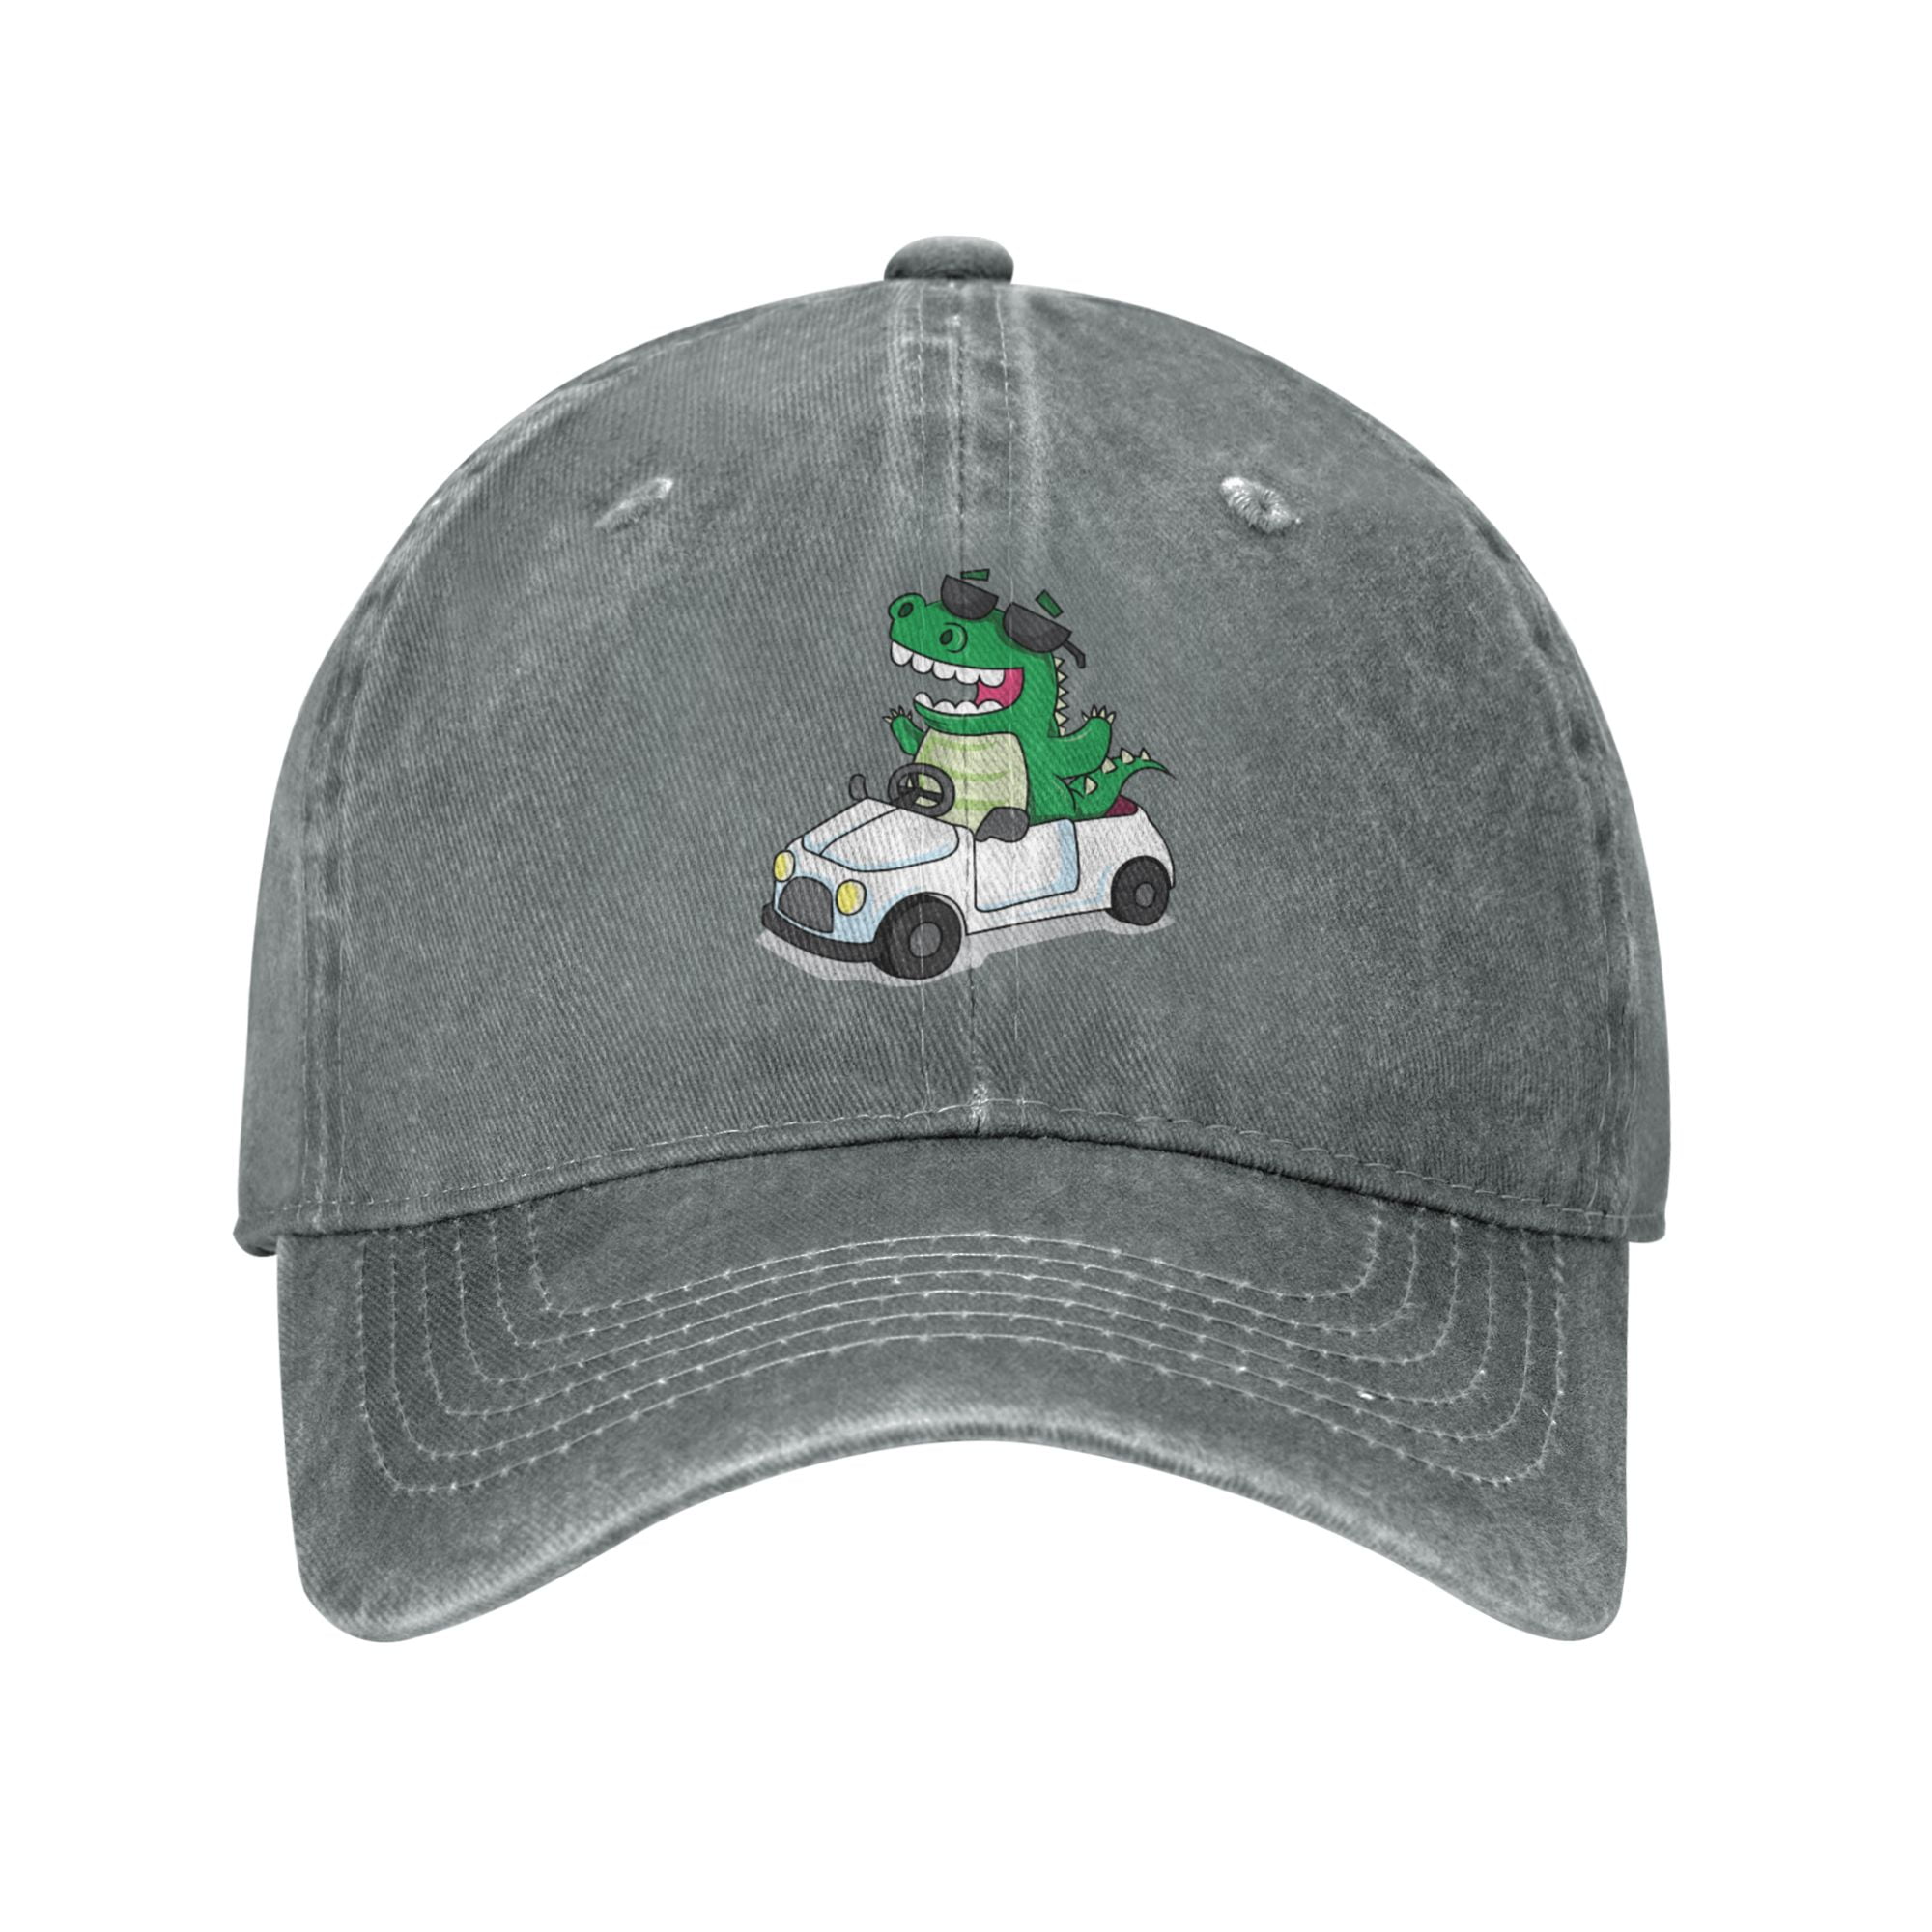 ZICANCN Adjustable Baseball Cap Women, Dinosaur Car Hats for Men